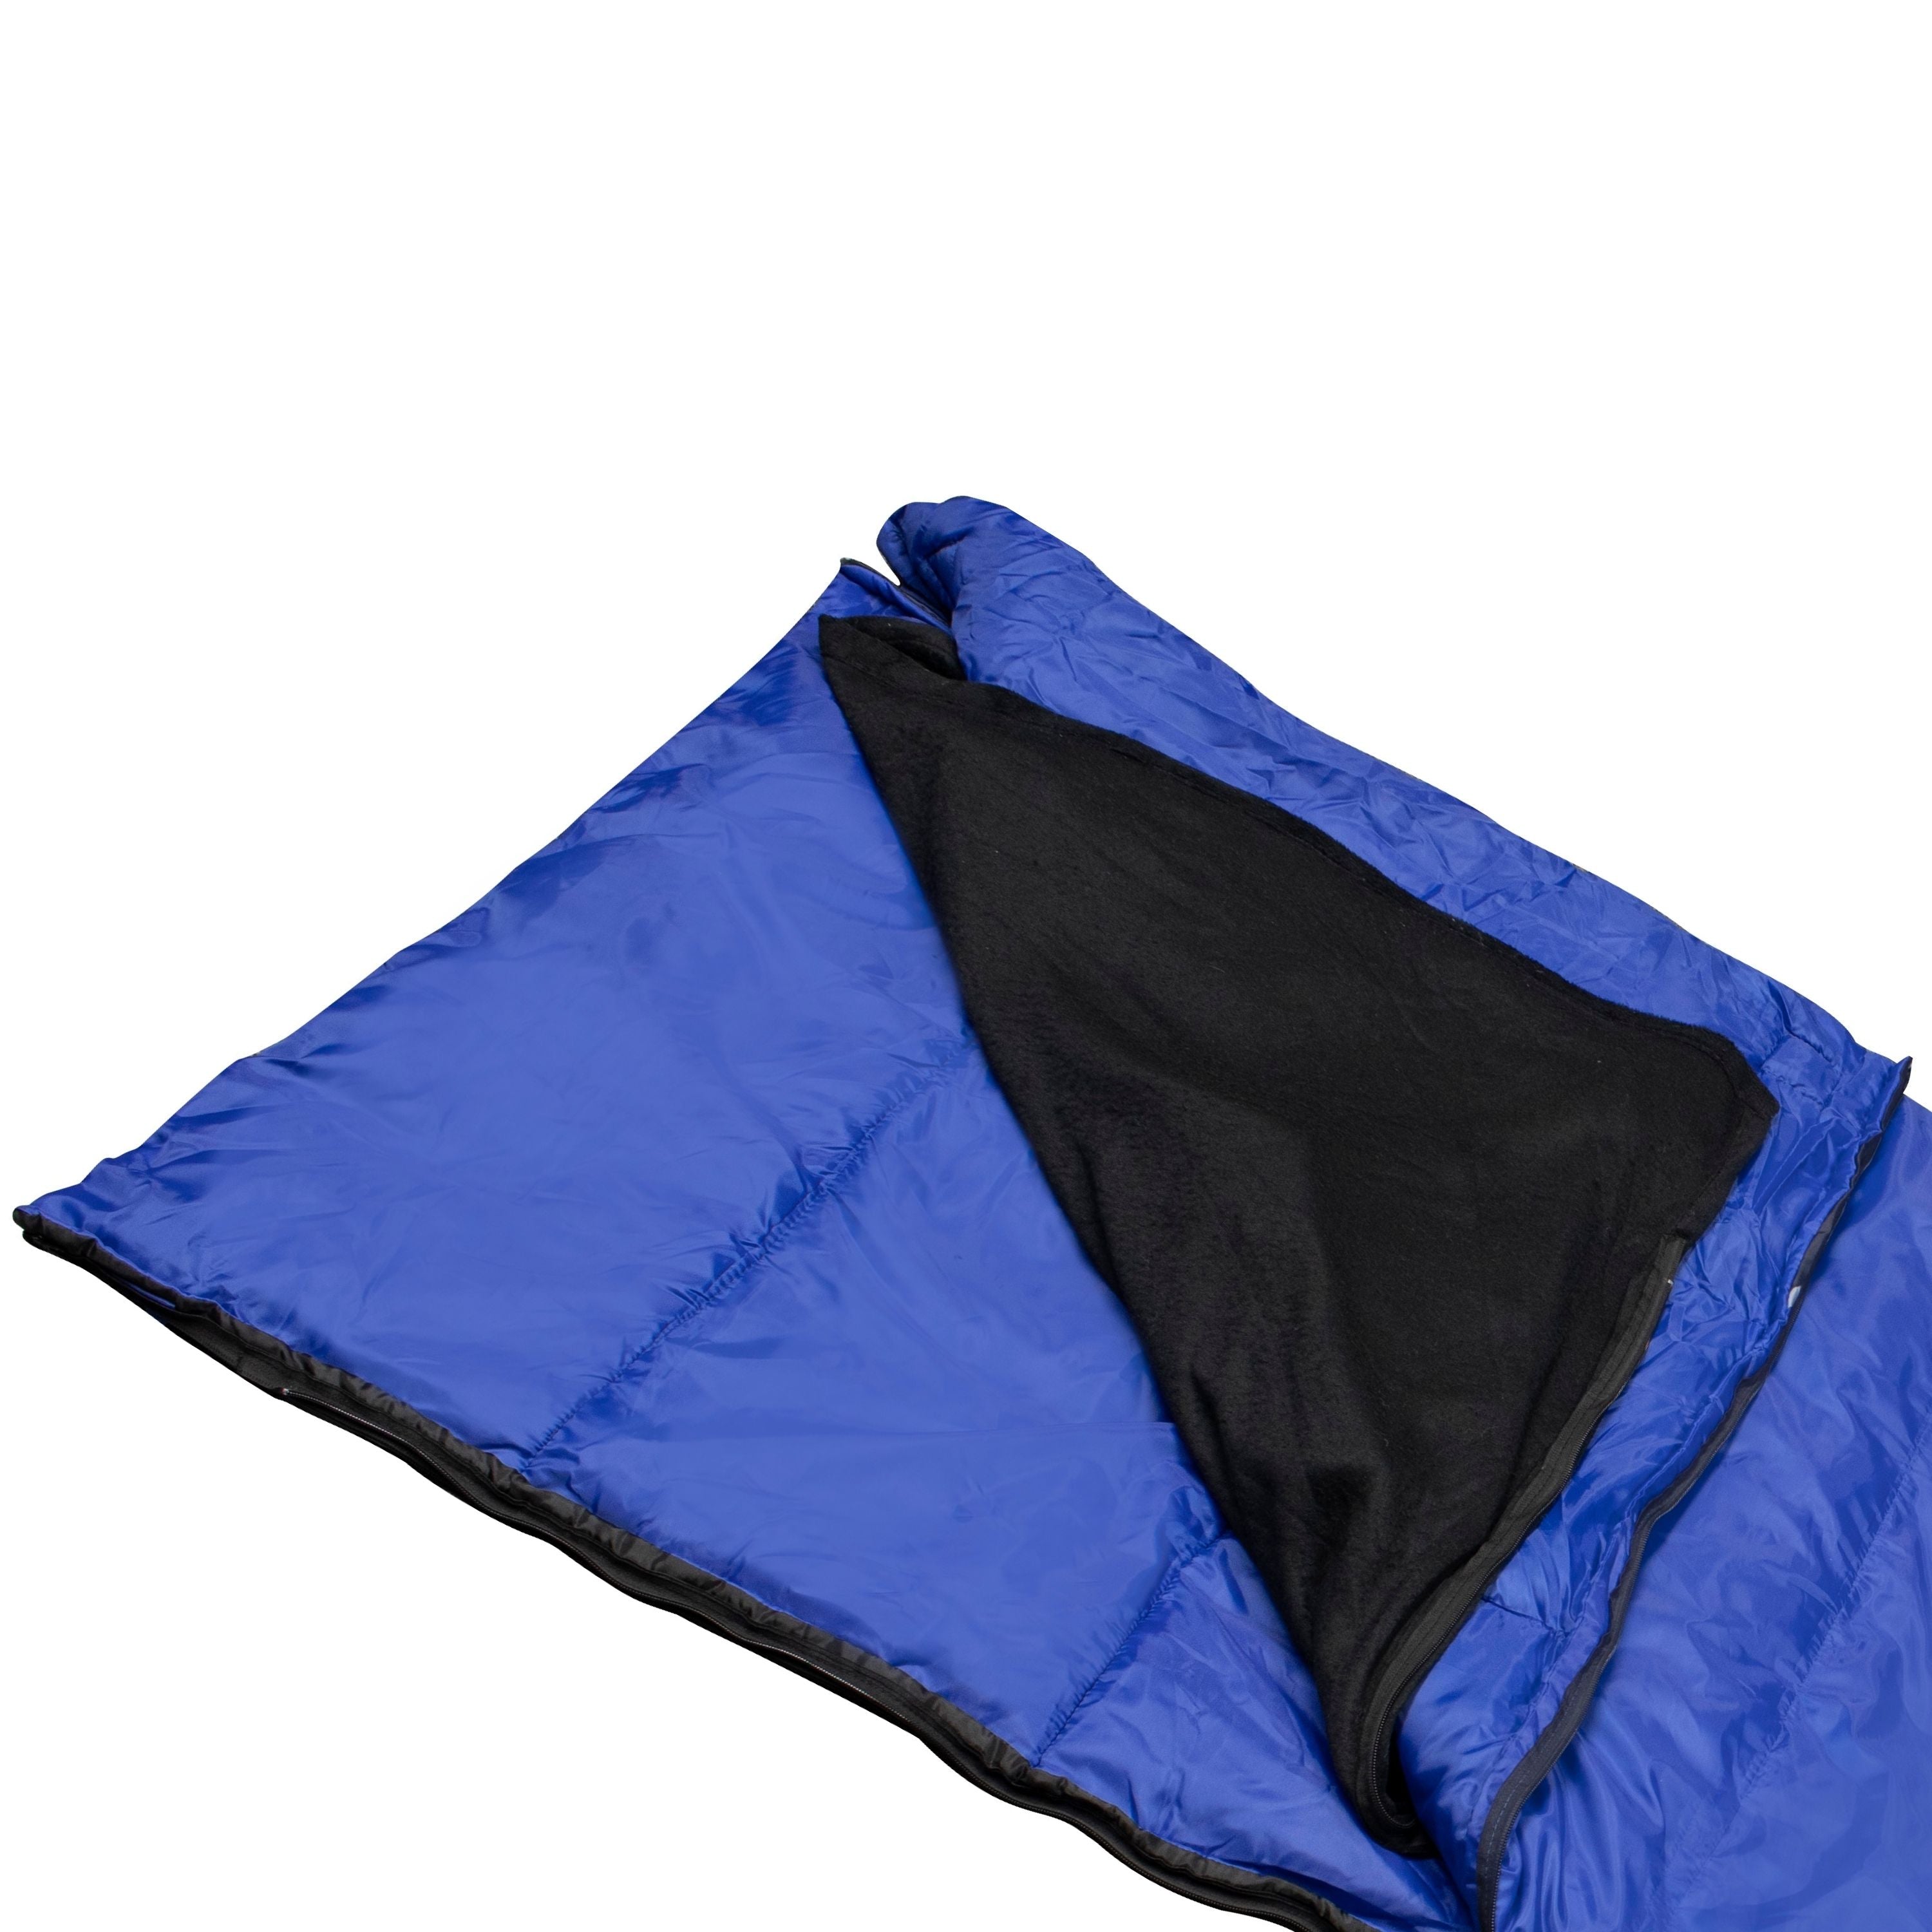 "Nova 3.5" Sleeping bag removable blanket